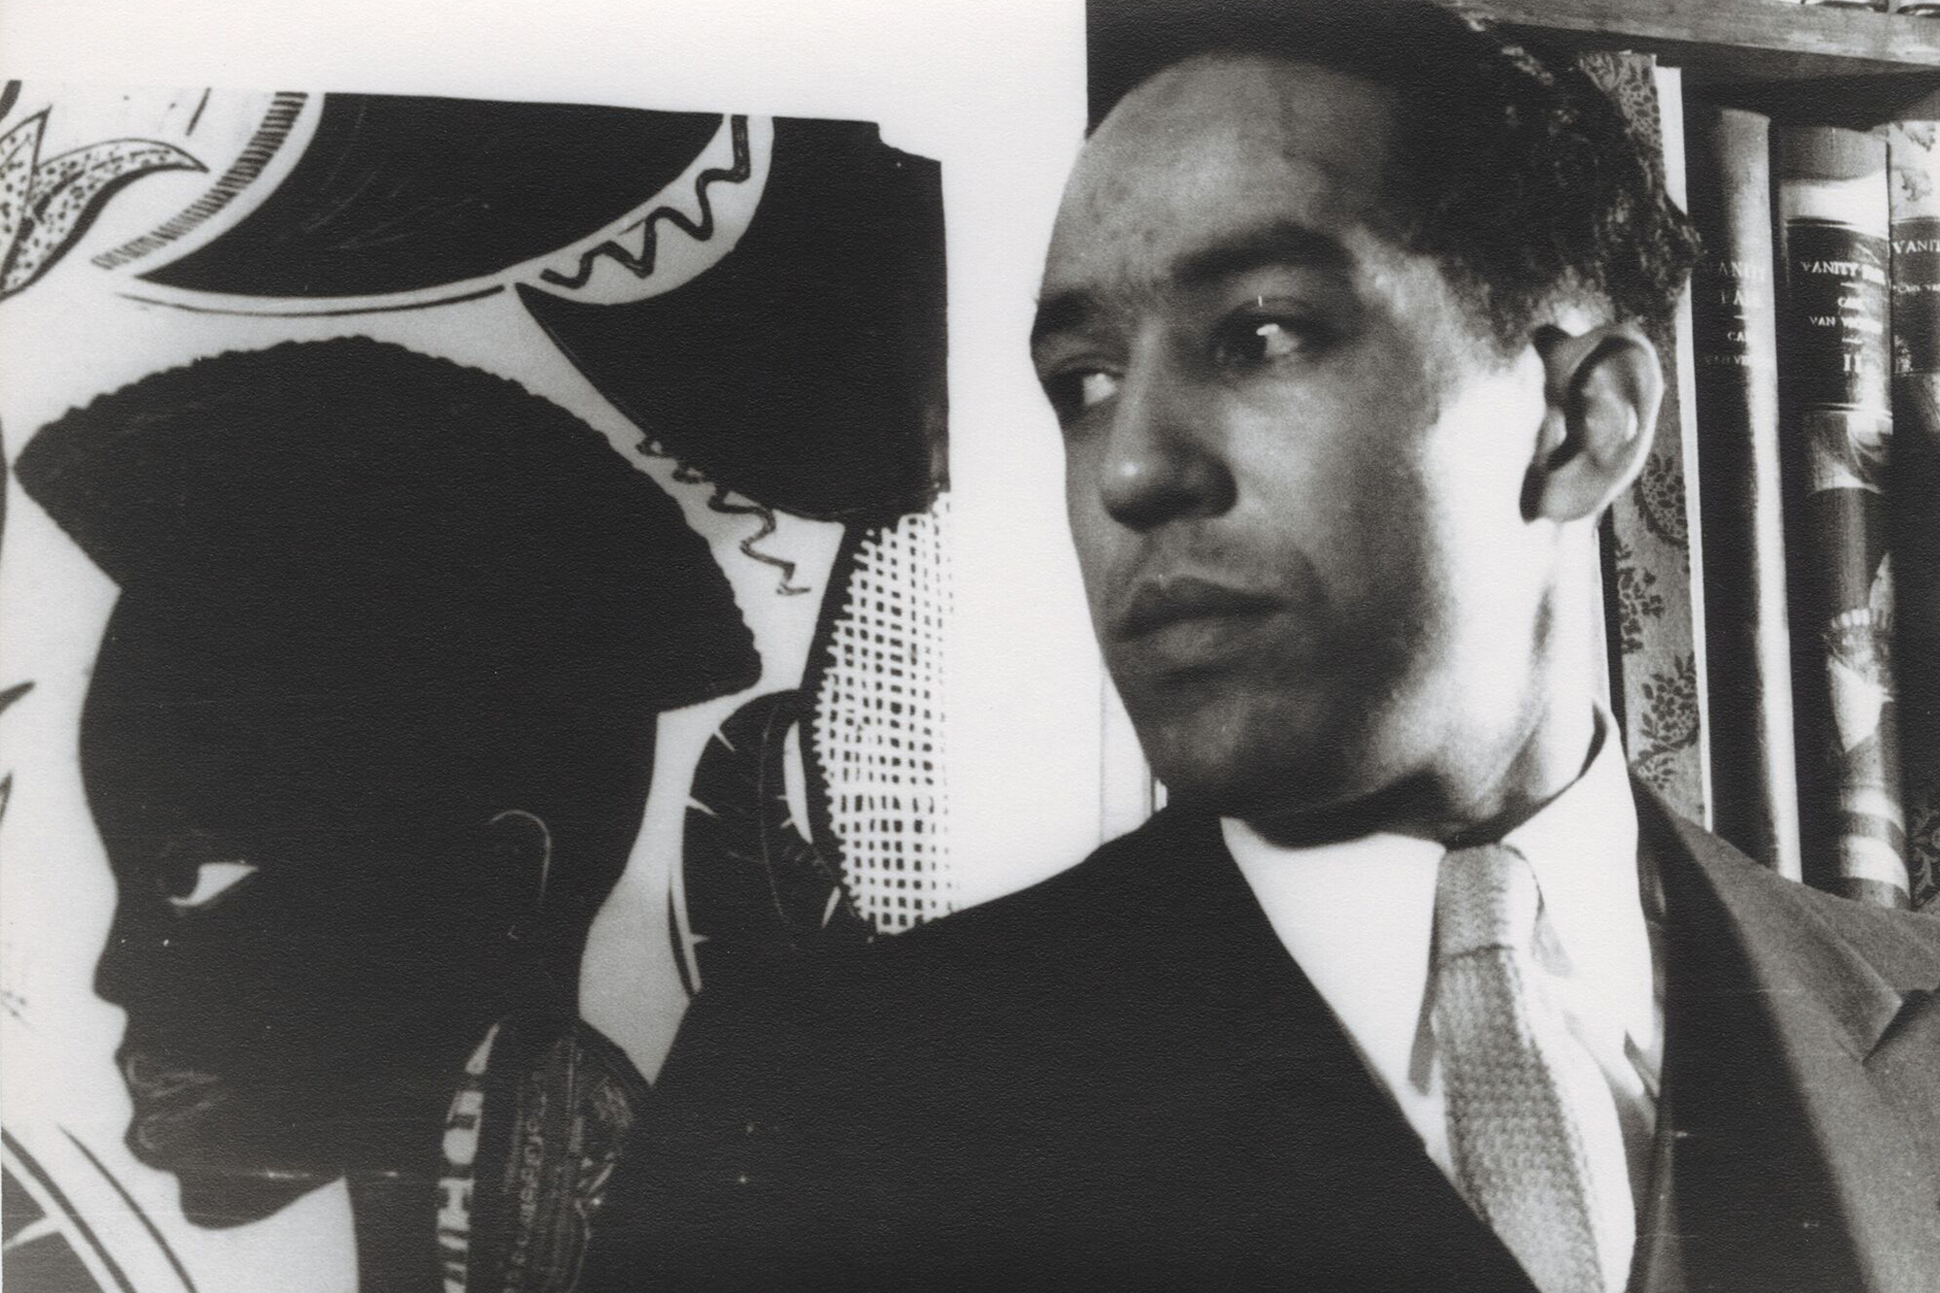 Langston Hughes.